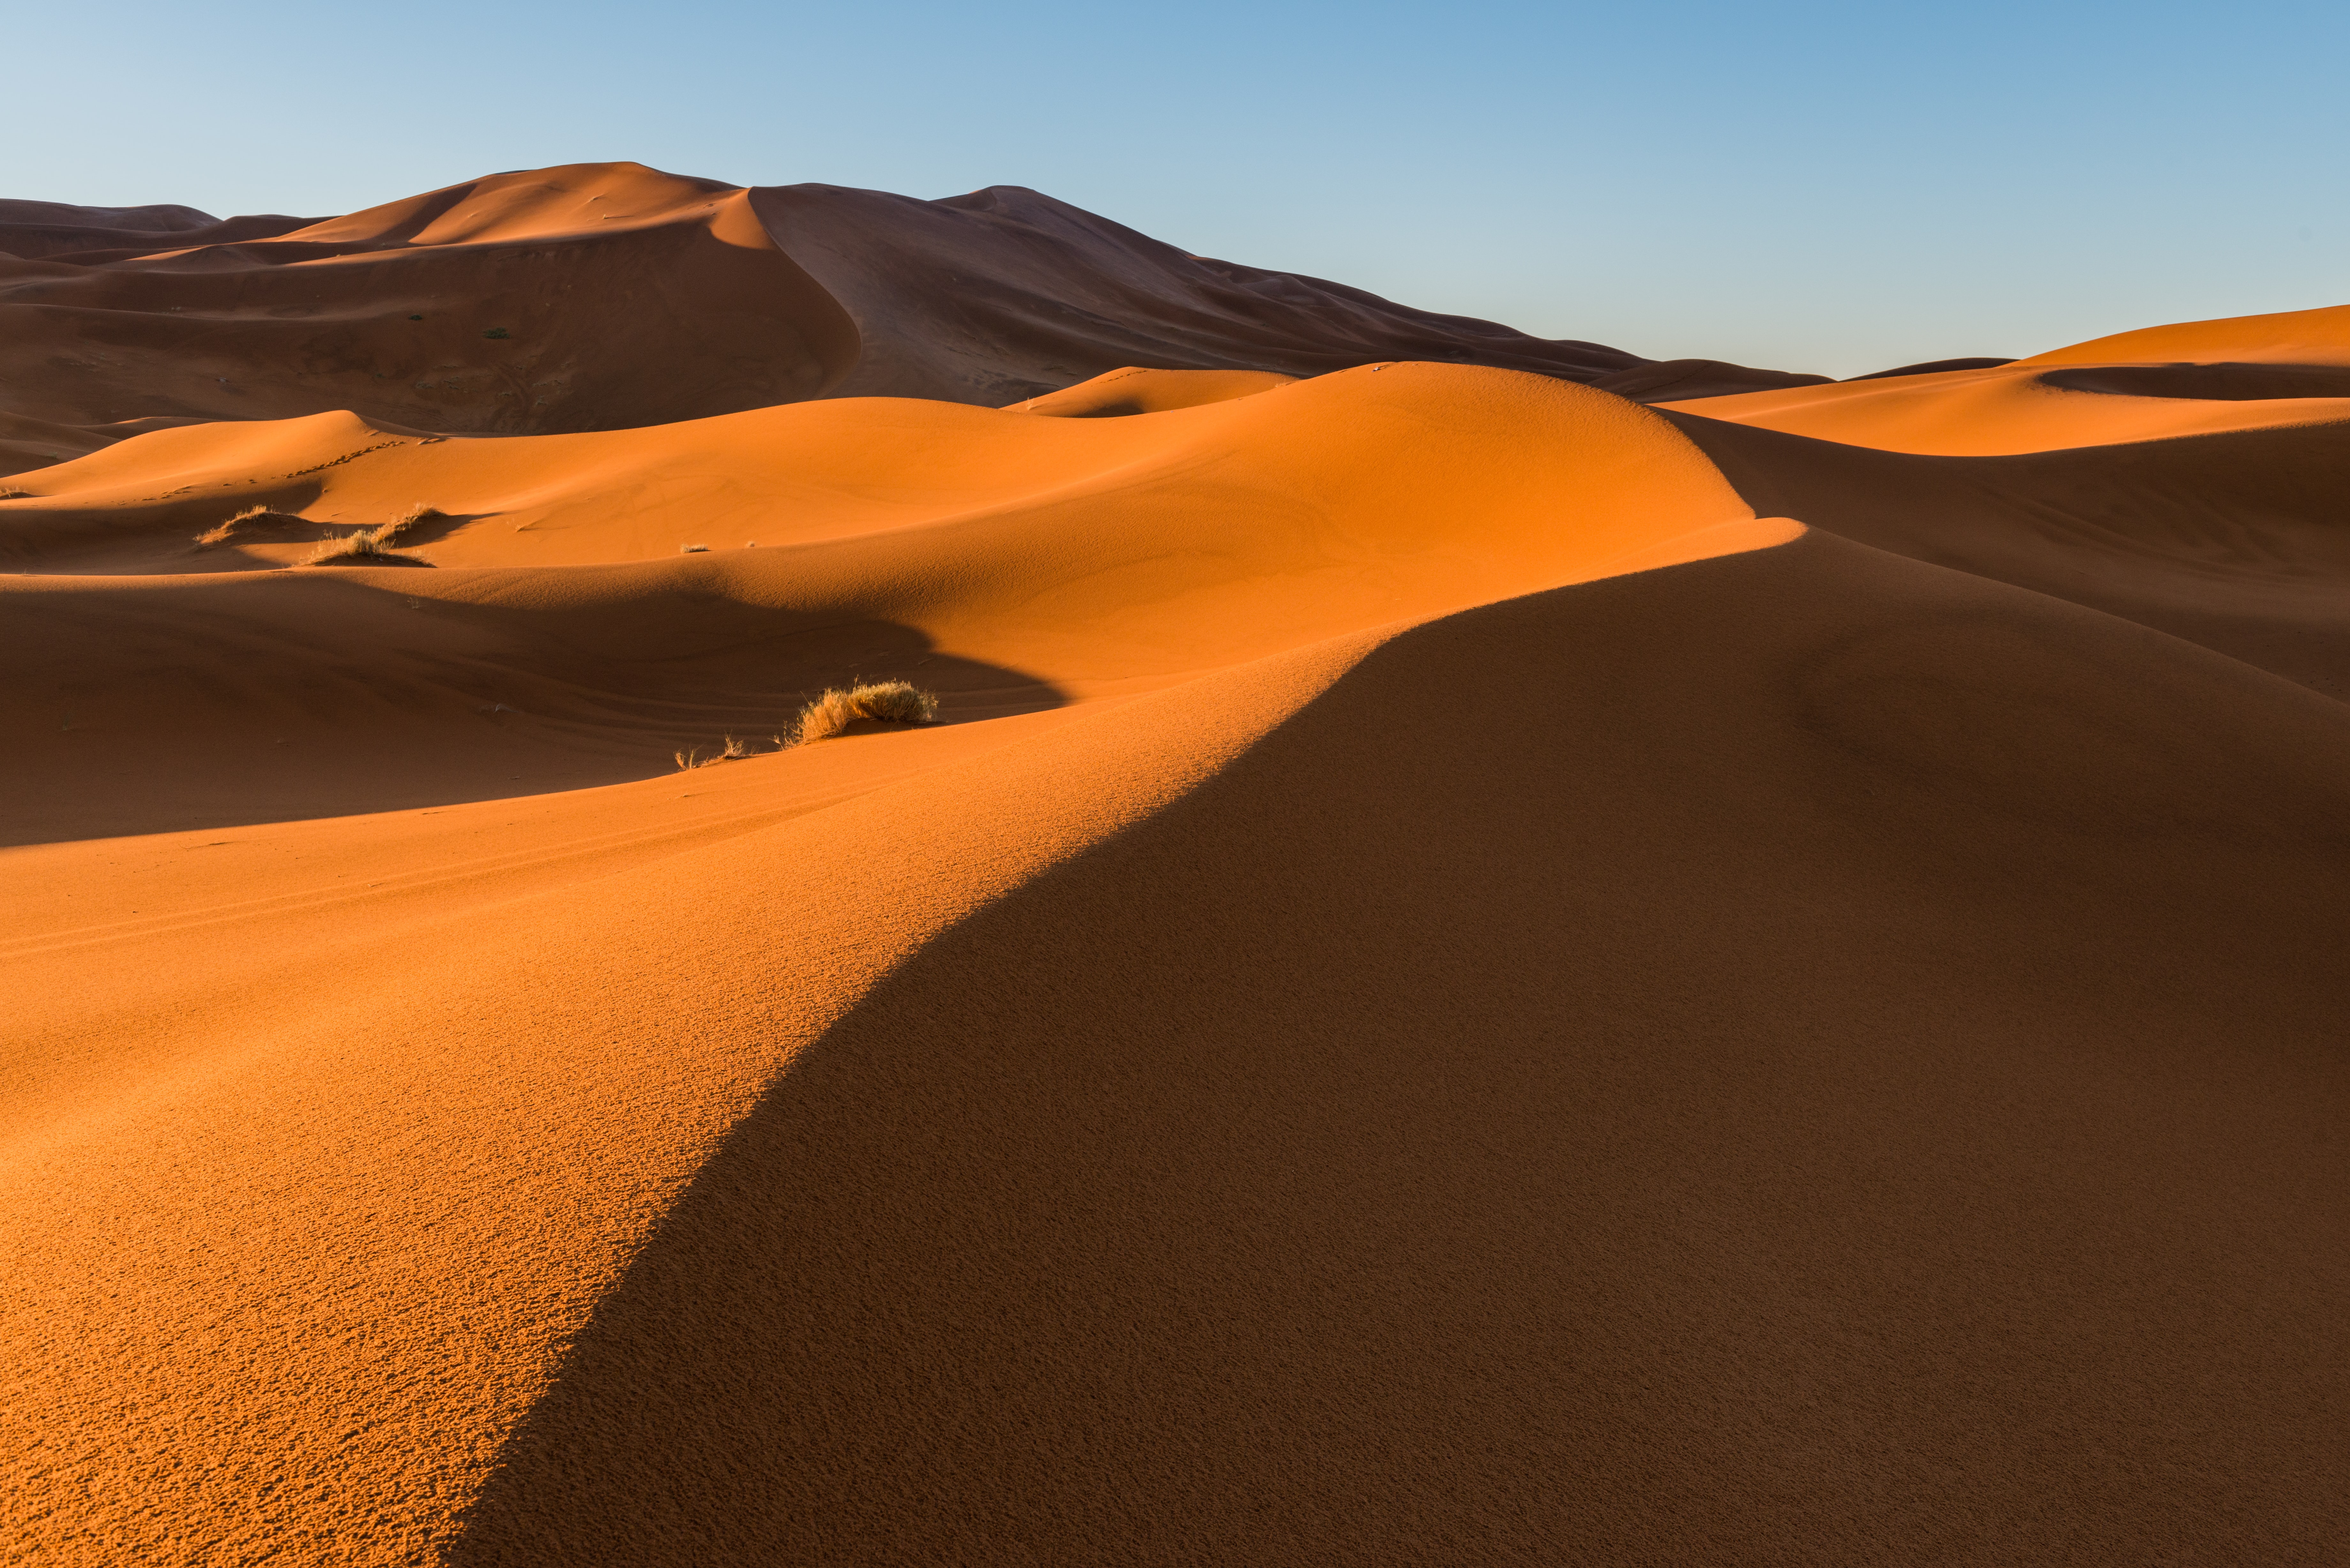 Sundowners on the Majestic Sahara Dunes